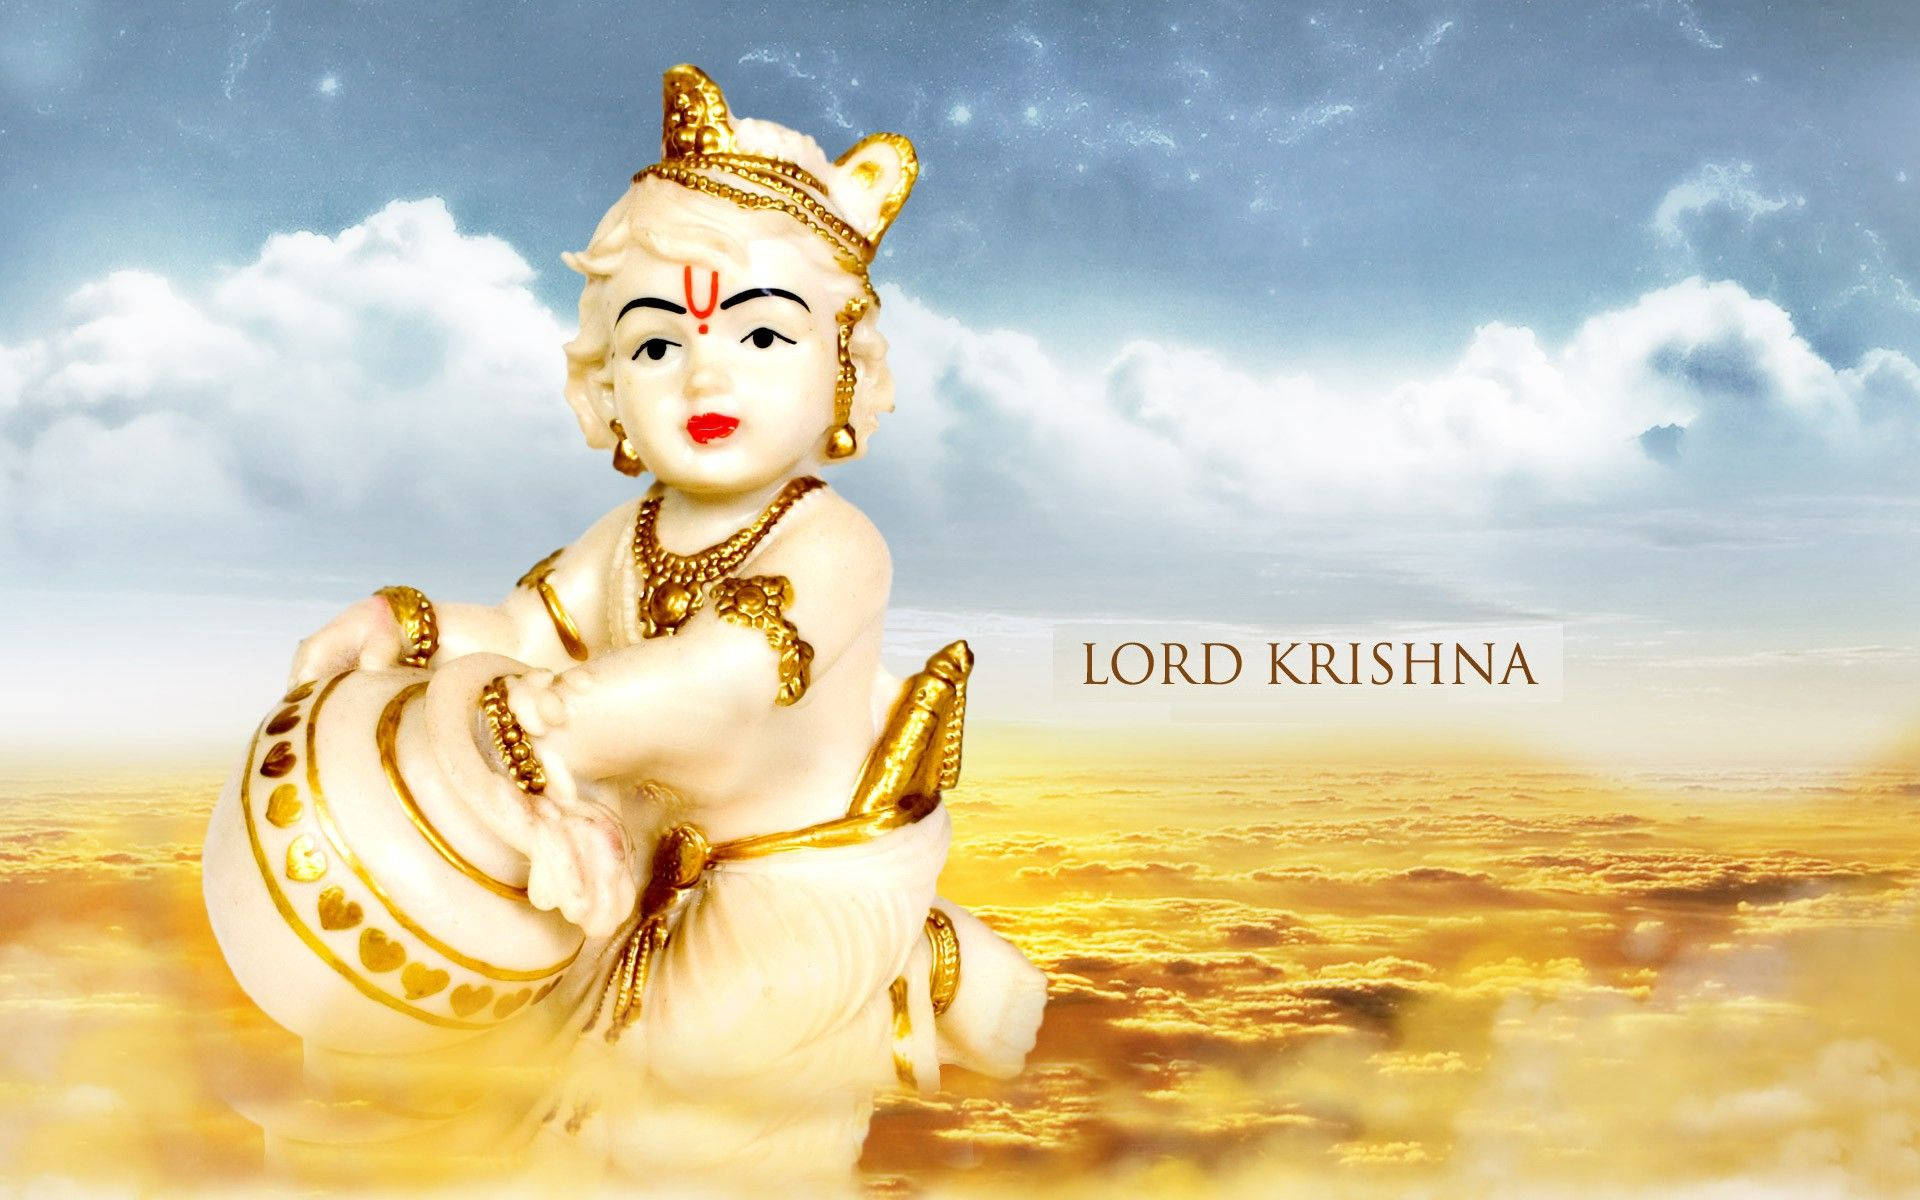 Bal Krishna Figurine Over Gold Clouds Background